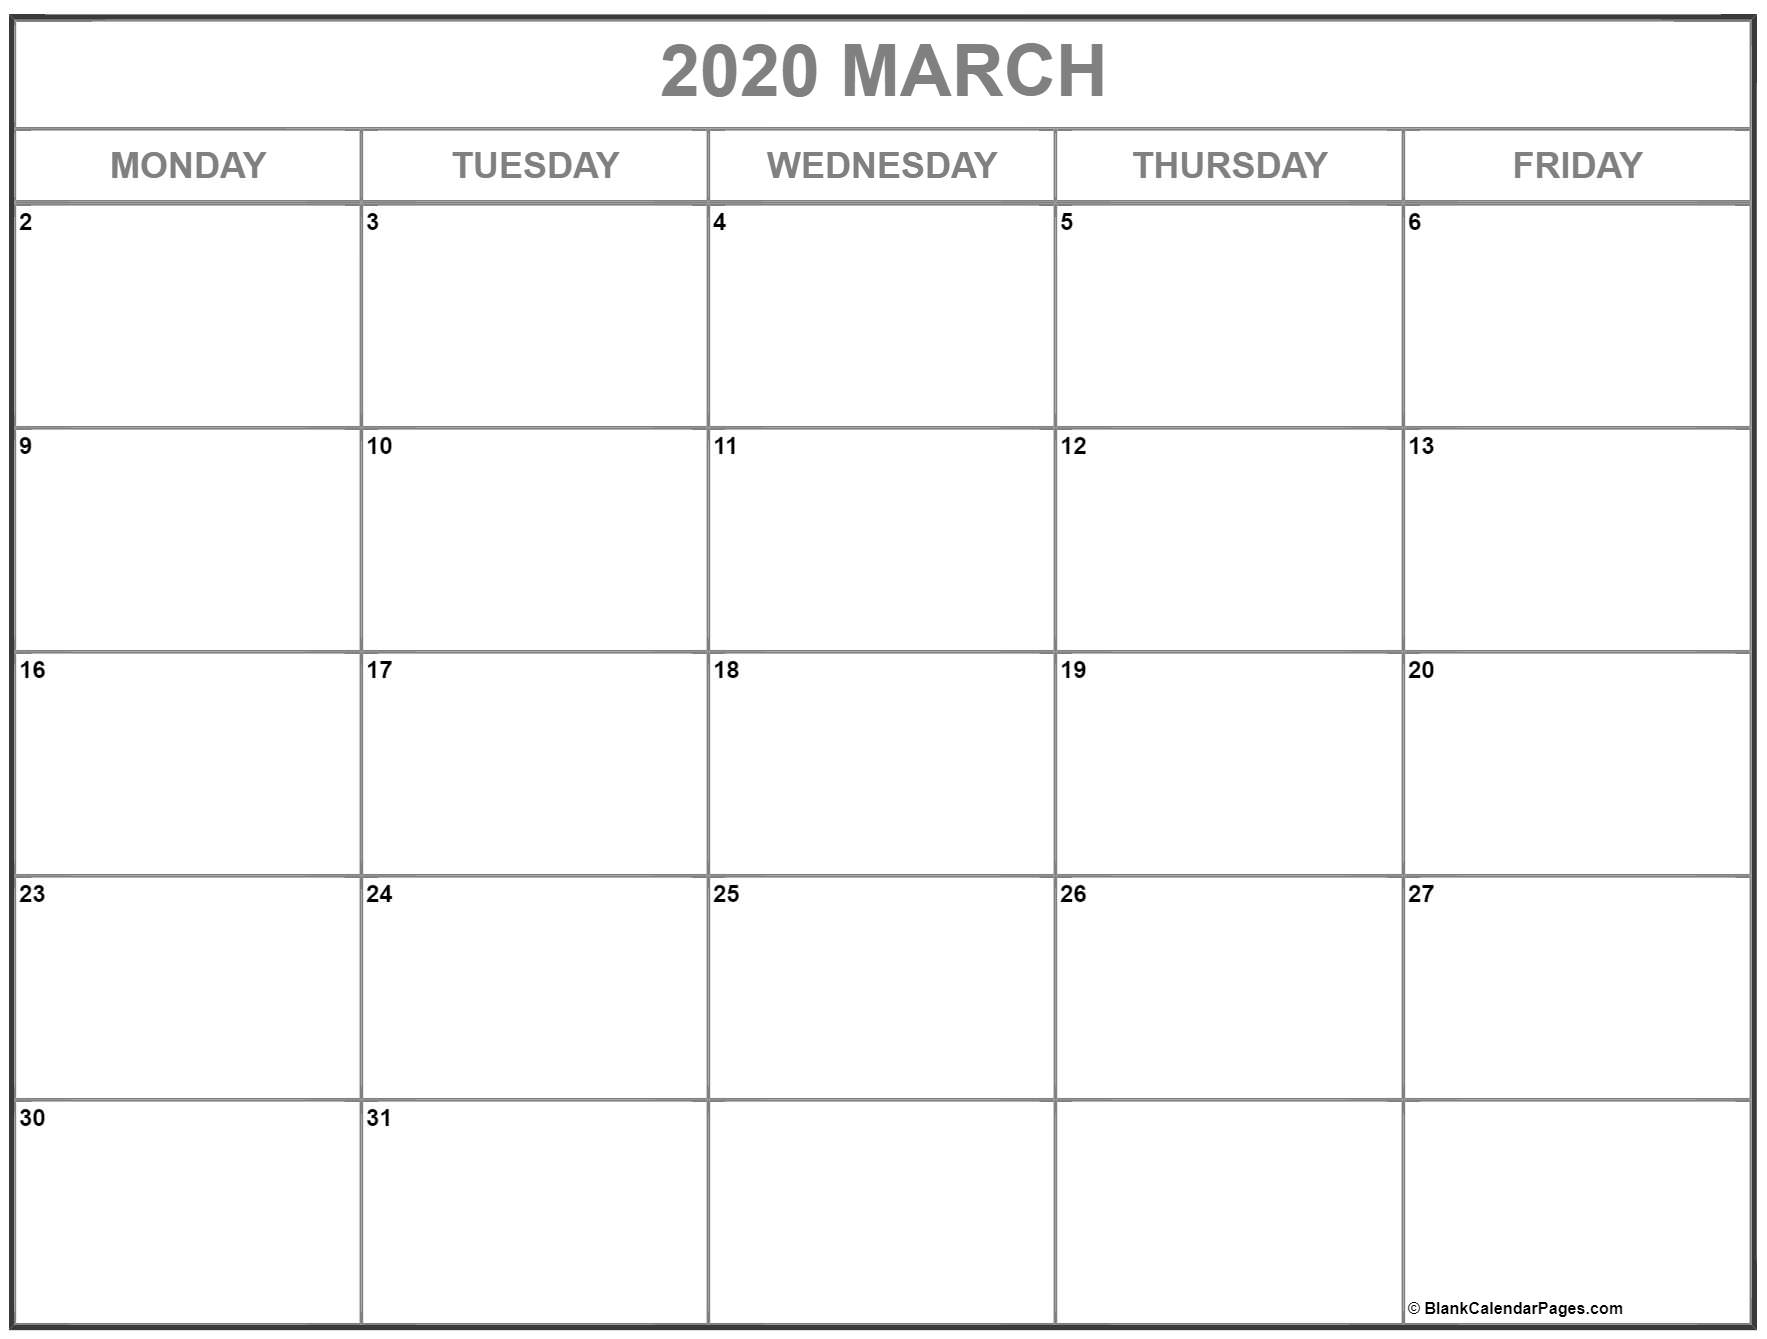 March 2020 Monday Calendar | Monday To Sunday